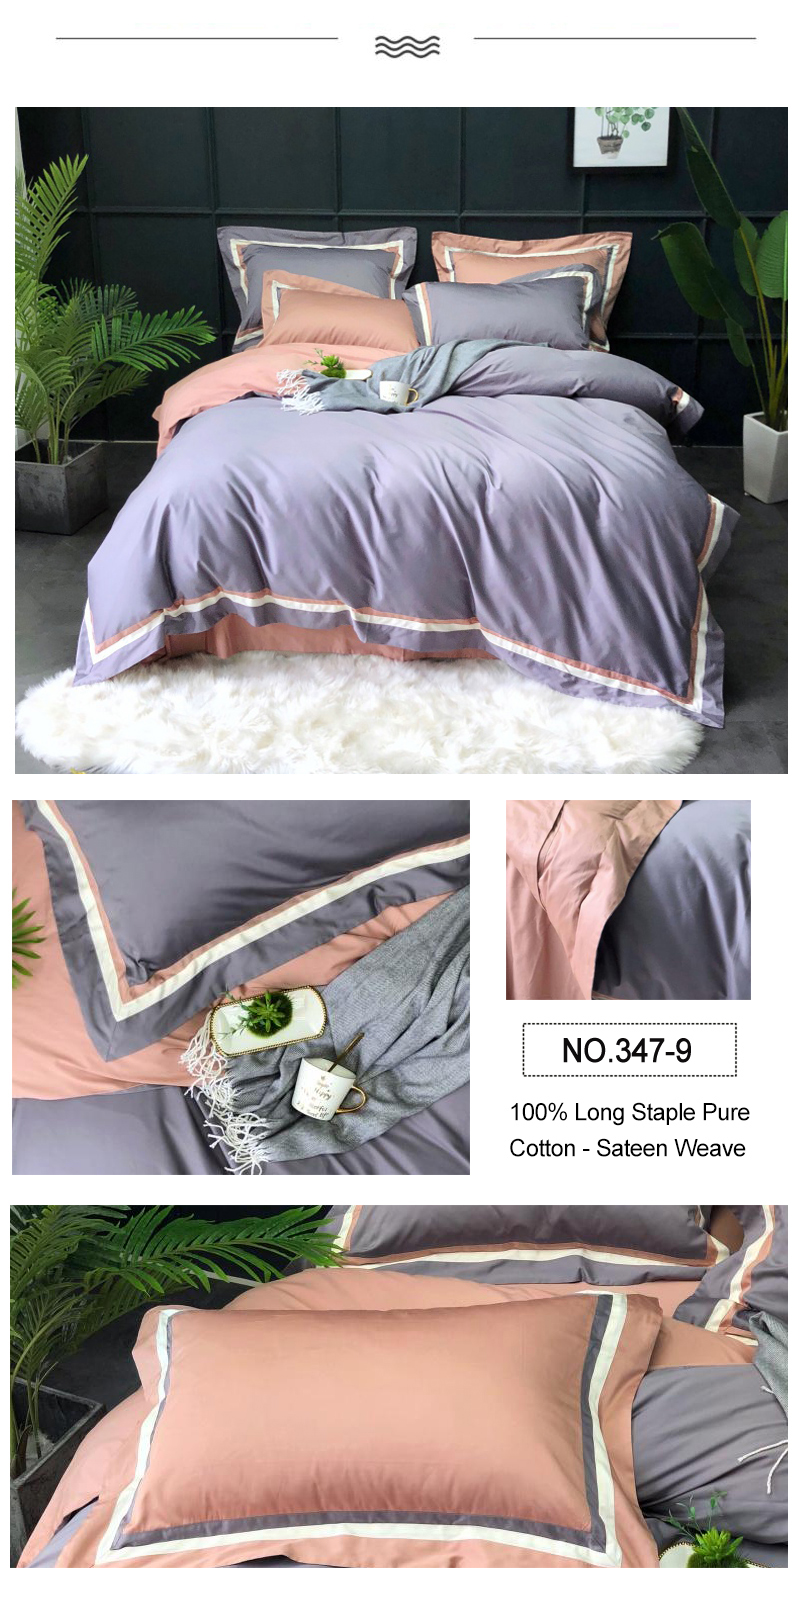 100% Long Staple Cotton Bedsheet Fashion Style